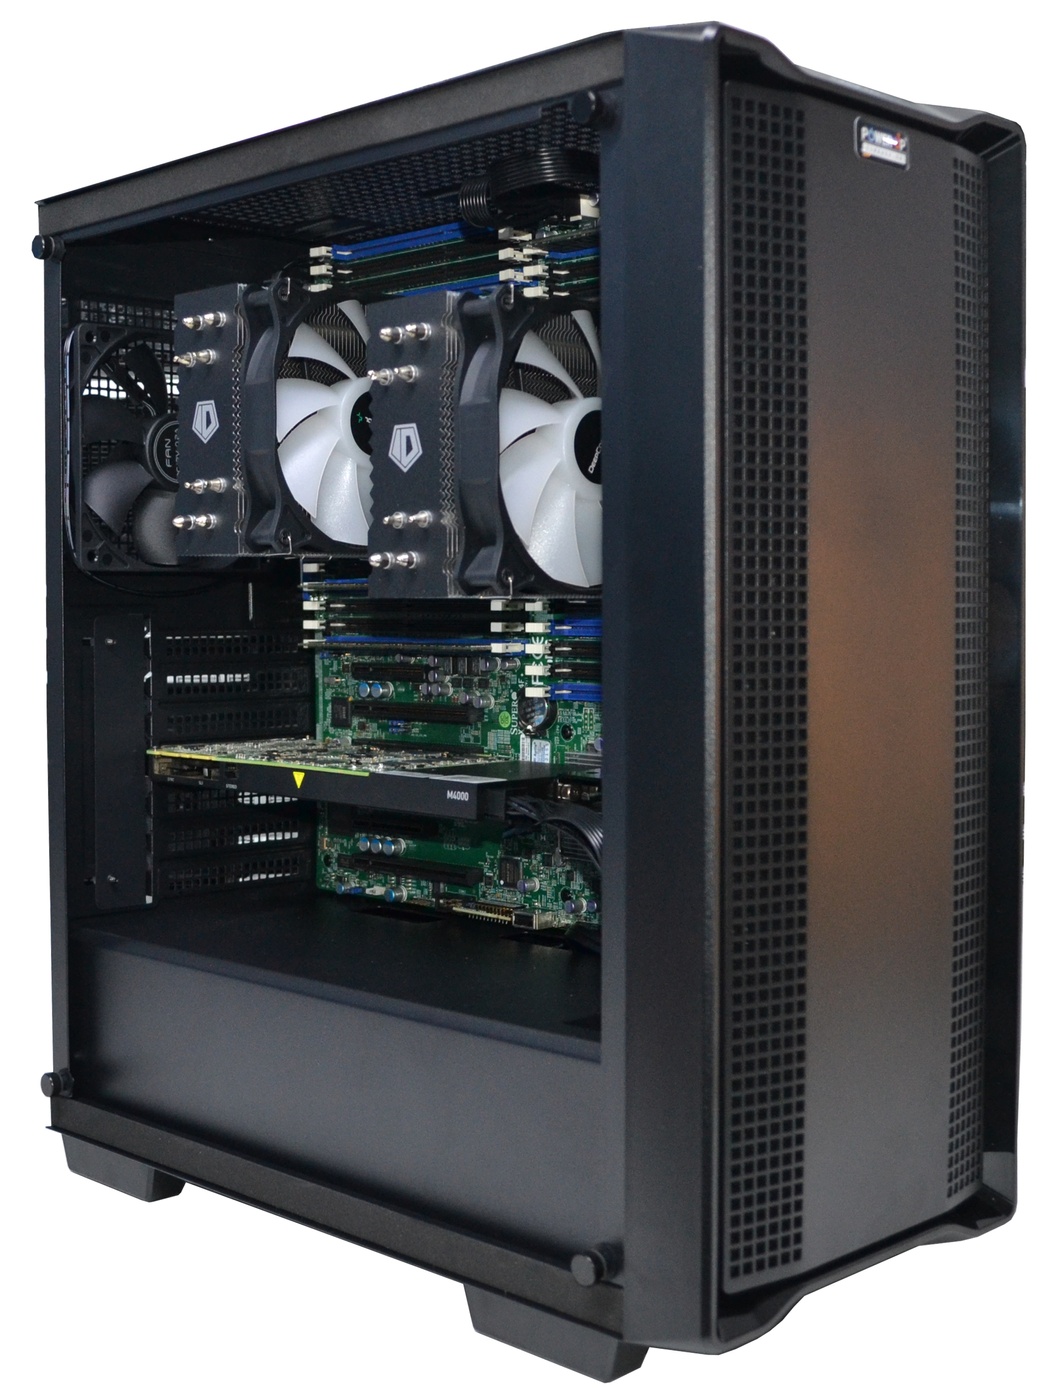 Двопроцесорна робоча станція PowerUp #202 Xeon E5 2670 v2 x2/32 GB/SSD 256GB/NVIDIA Quadro M4000 8GB